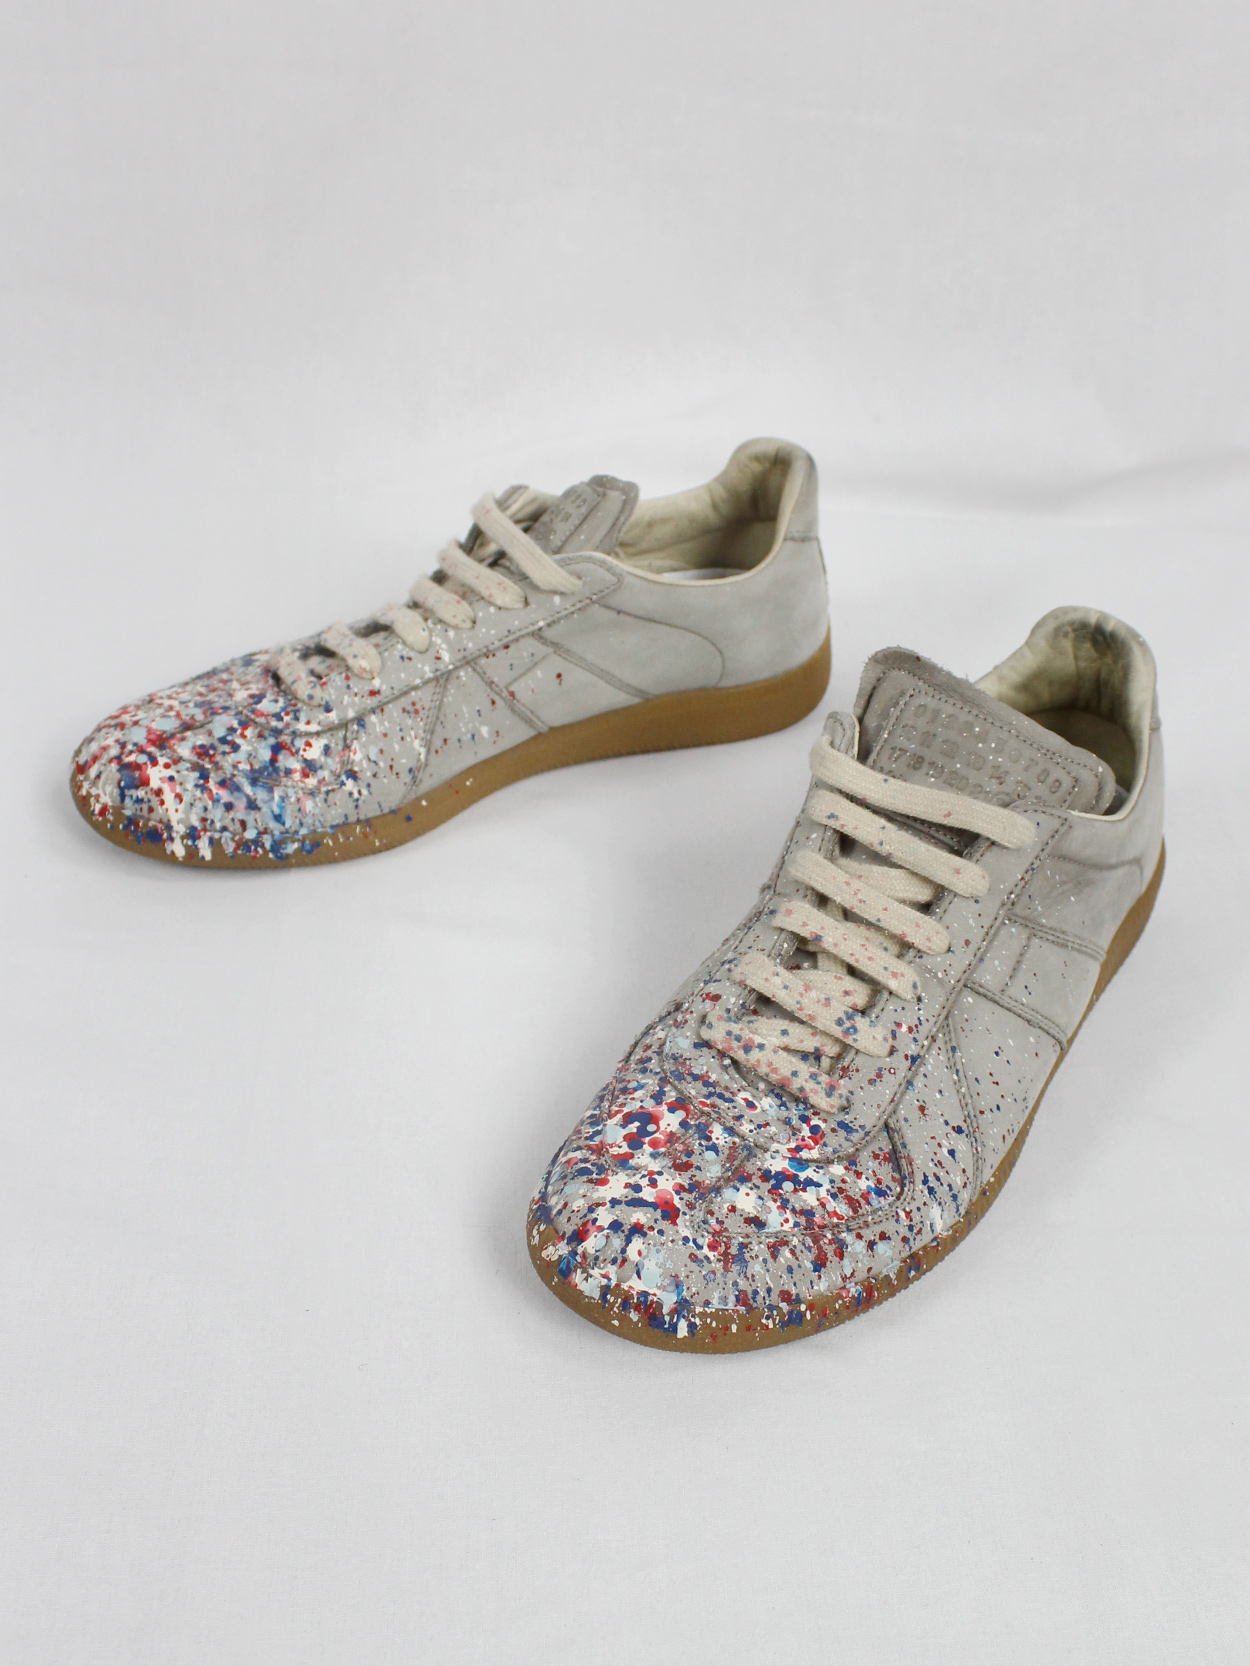 Maison Martin Margiela replica beige sneakers with paint splatters (40) - V A N II A S